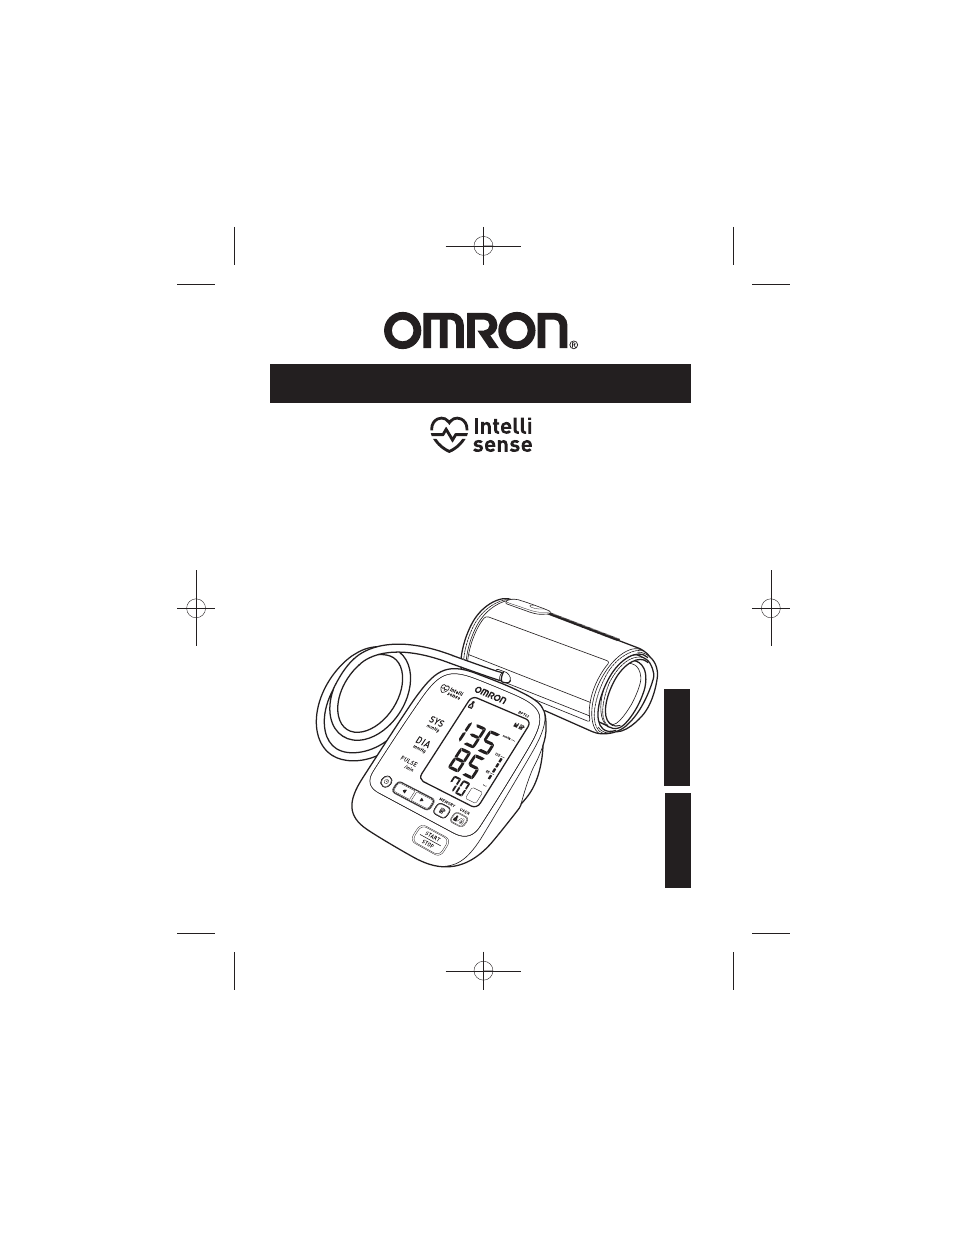 Omron E5cs Manual Download